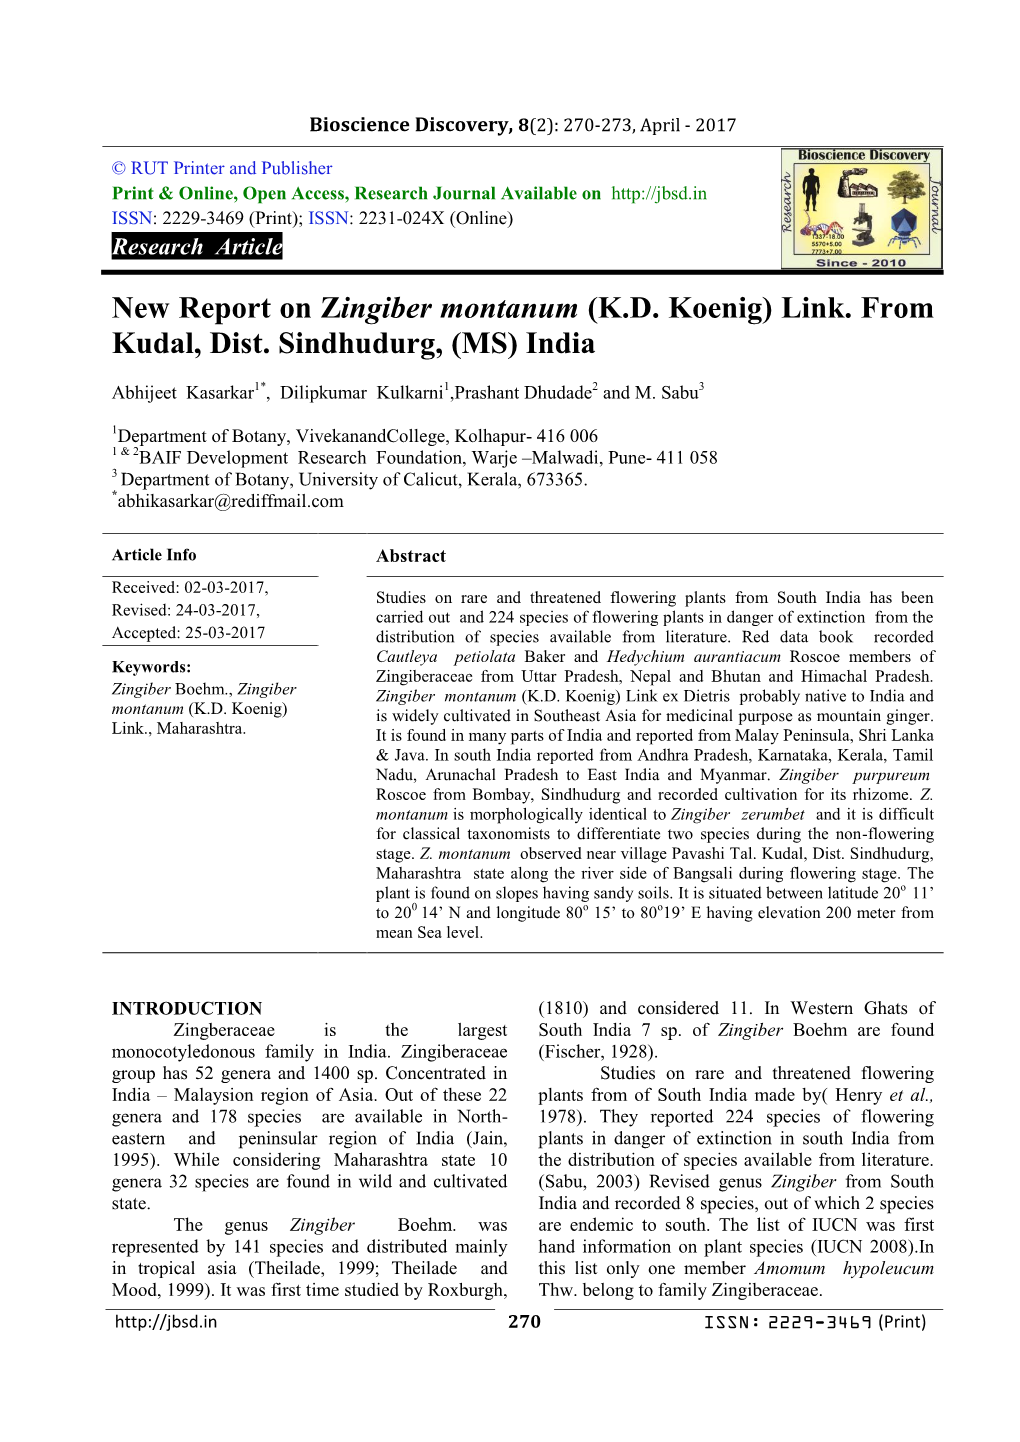 New Report on Zingiber Montanum (KD Koenig)